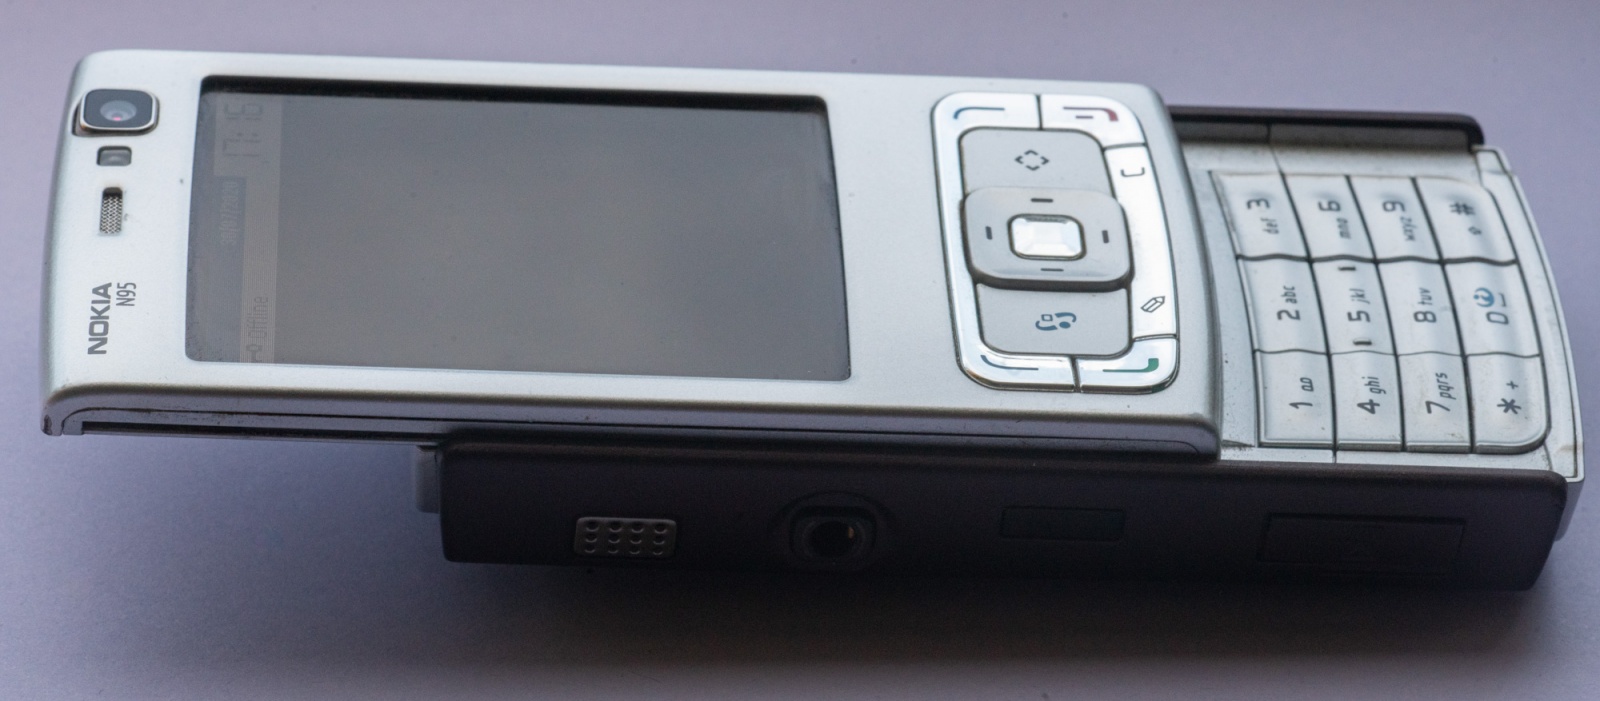 Nokia N95, лучший смартфон старой школы - 9